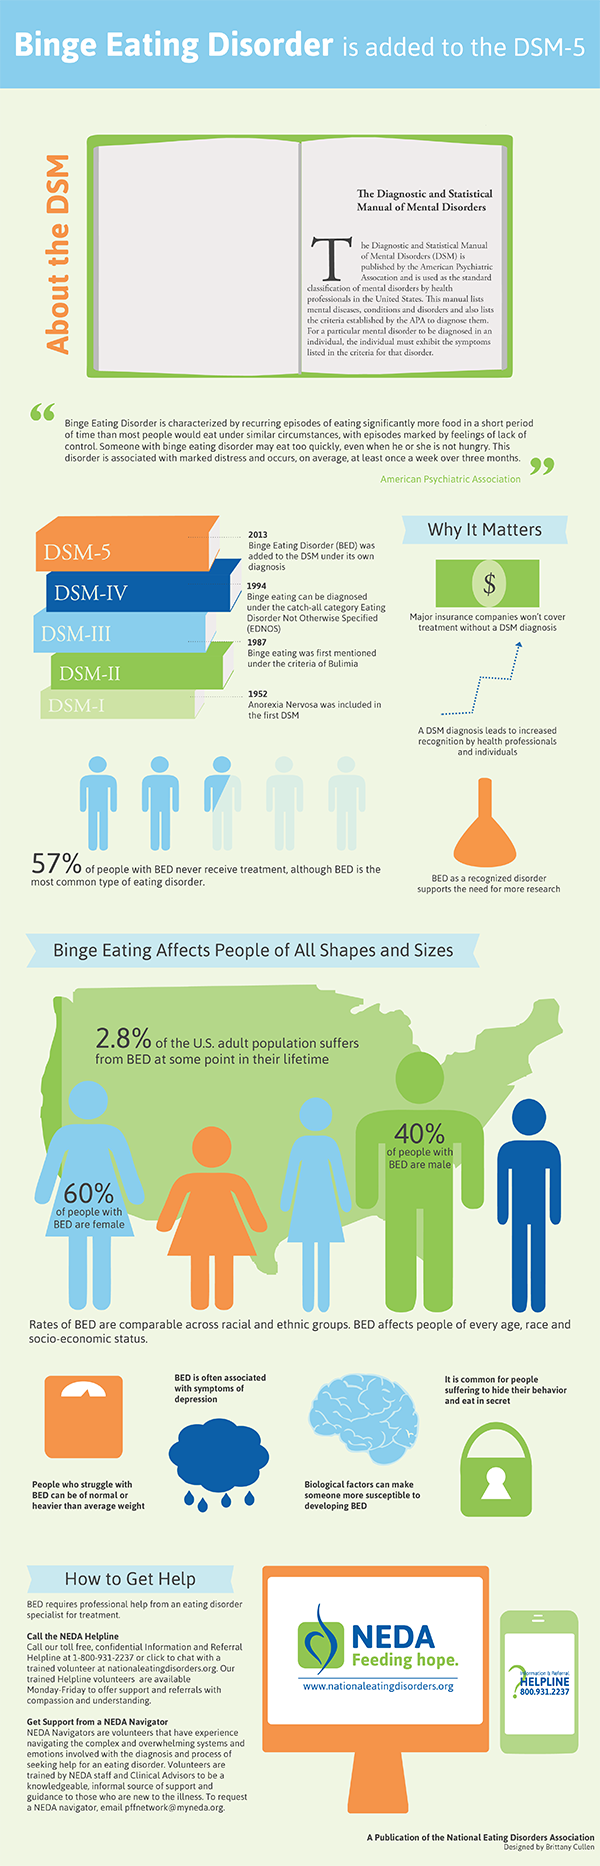 NEDA's Binge Eating Disorder Info Card. Downloaded from https://www.nationaleatingdisorders.org/blog/infographic-binge-eating-disorder on 26 Jul 15.